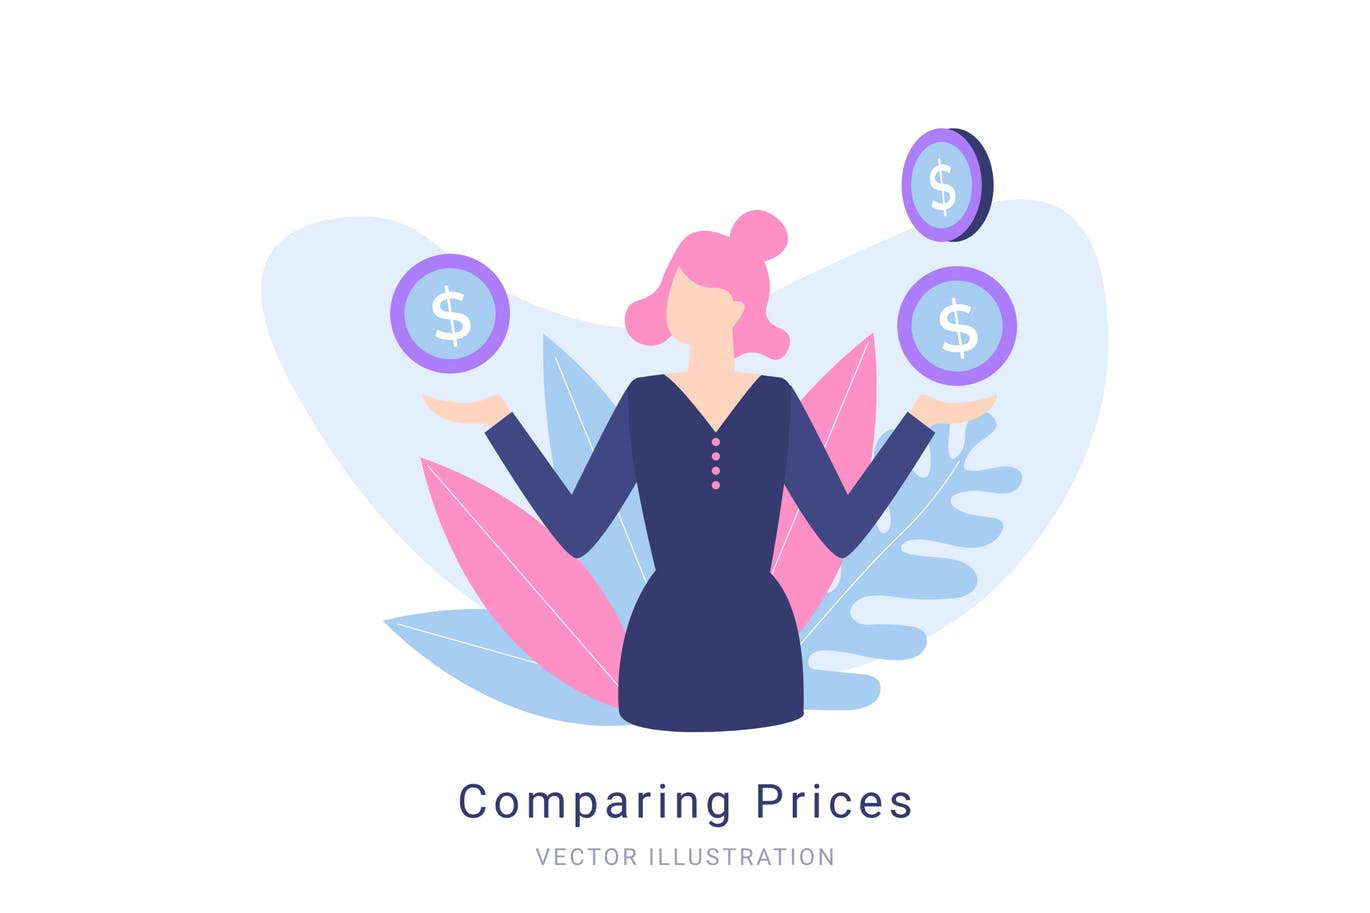 价格比较概念矢量插画素材库精选素材 Comparing Prices Vector Illustration插图